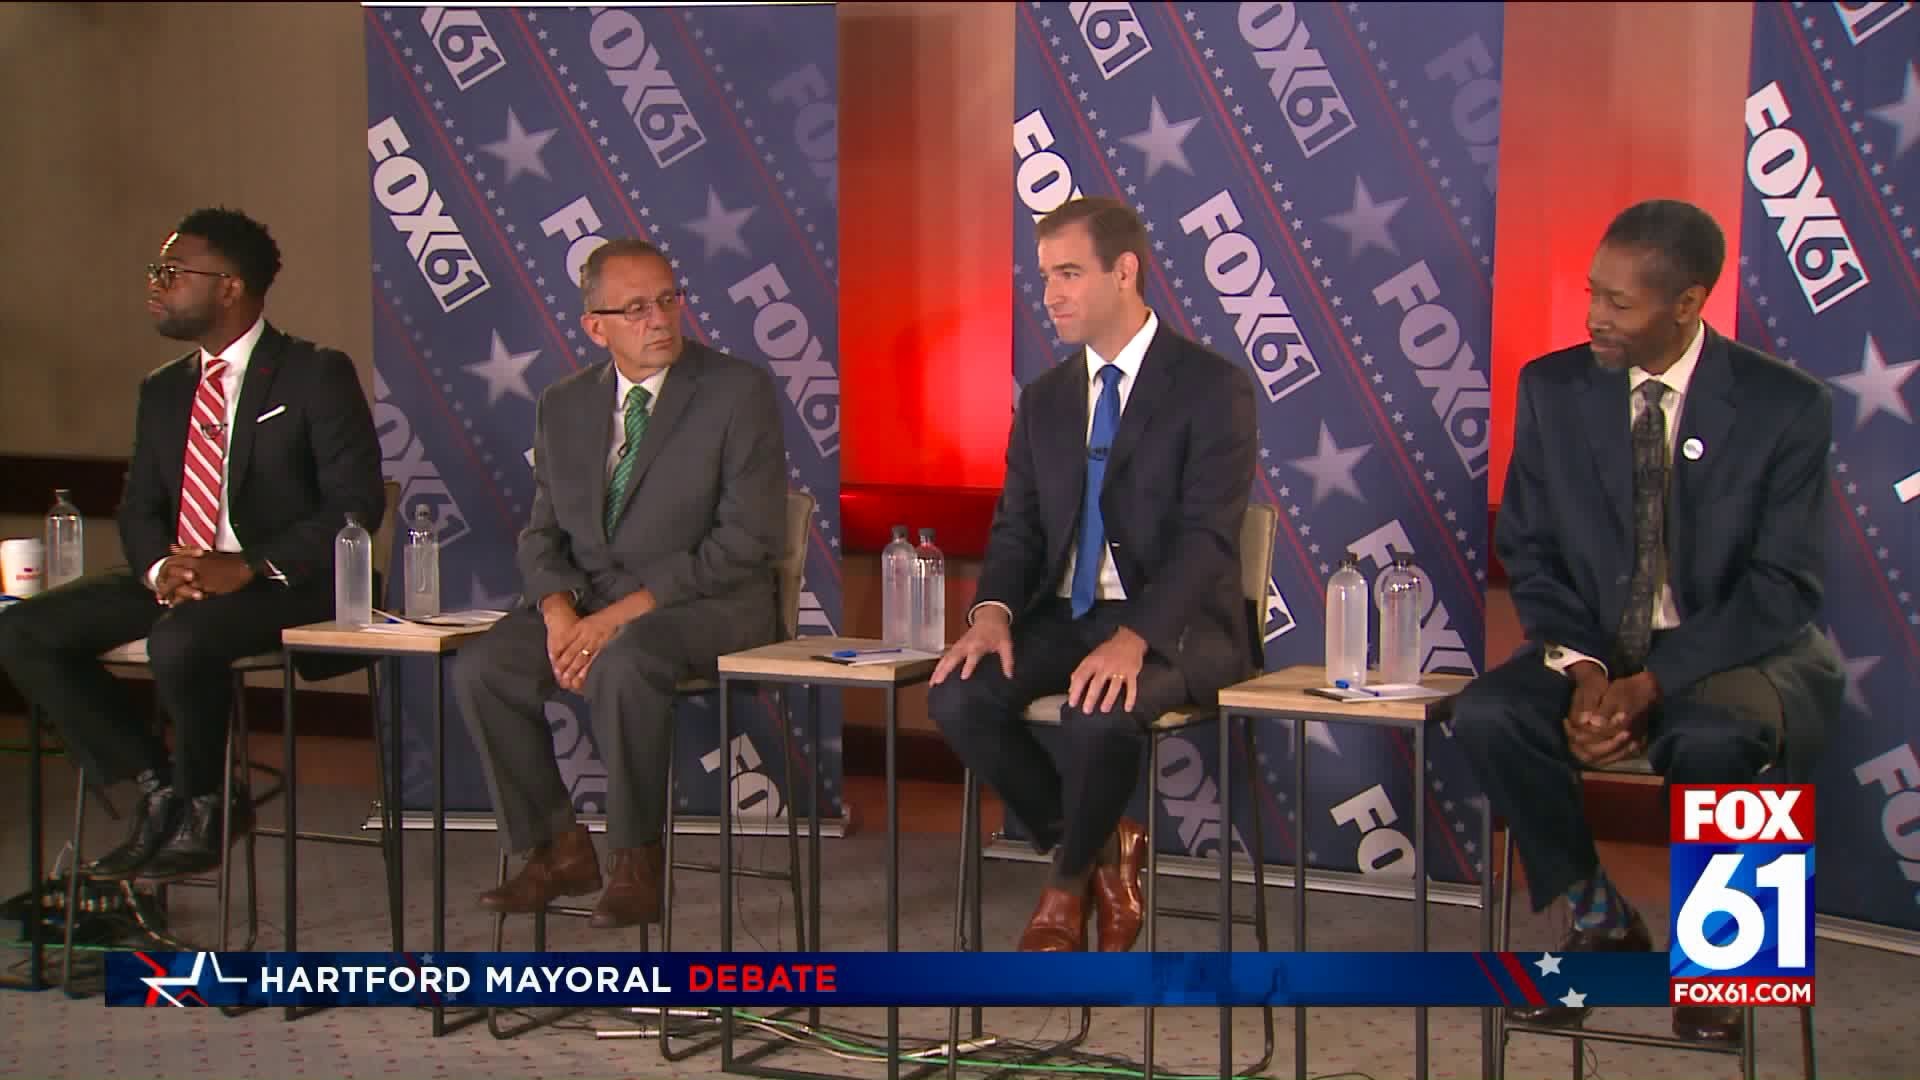 Hartford Mayoral Debate: What tangible change will you bring to Hartford?